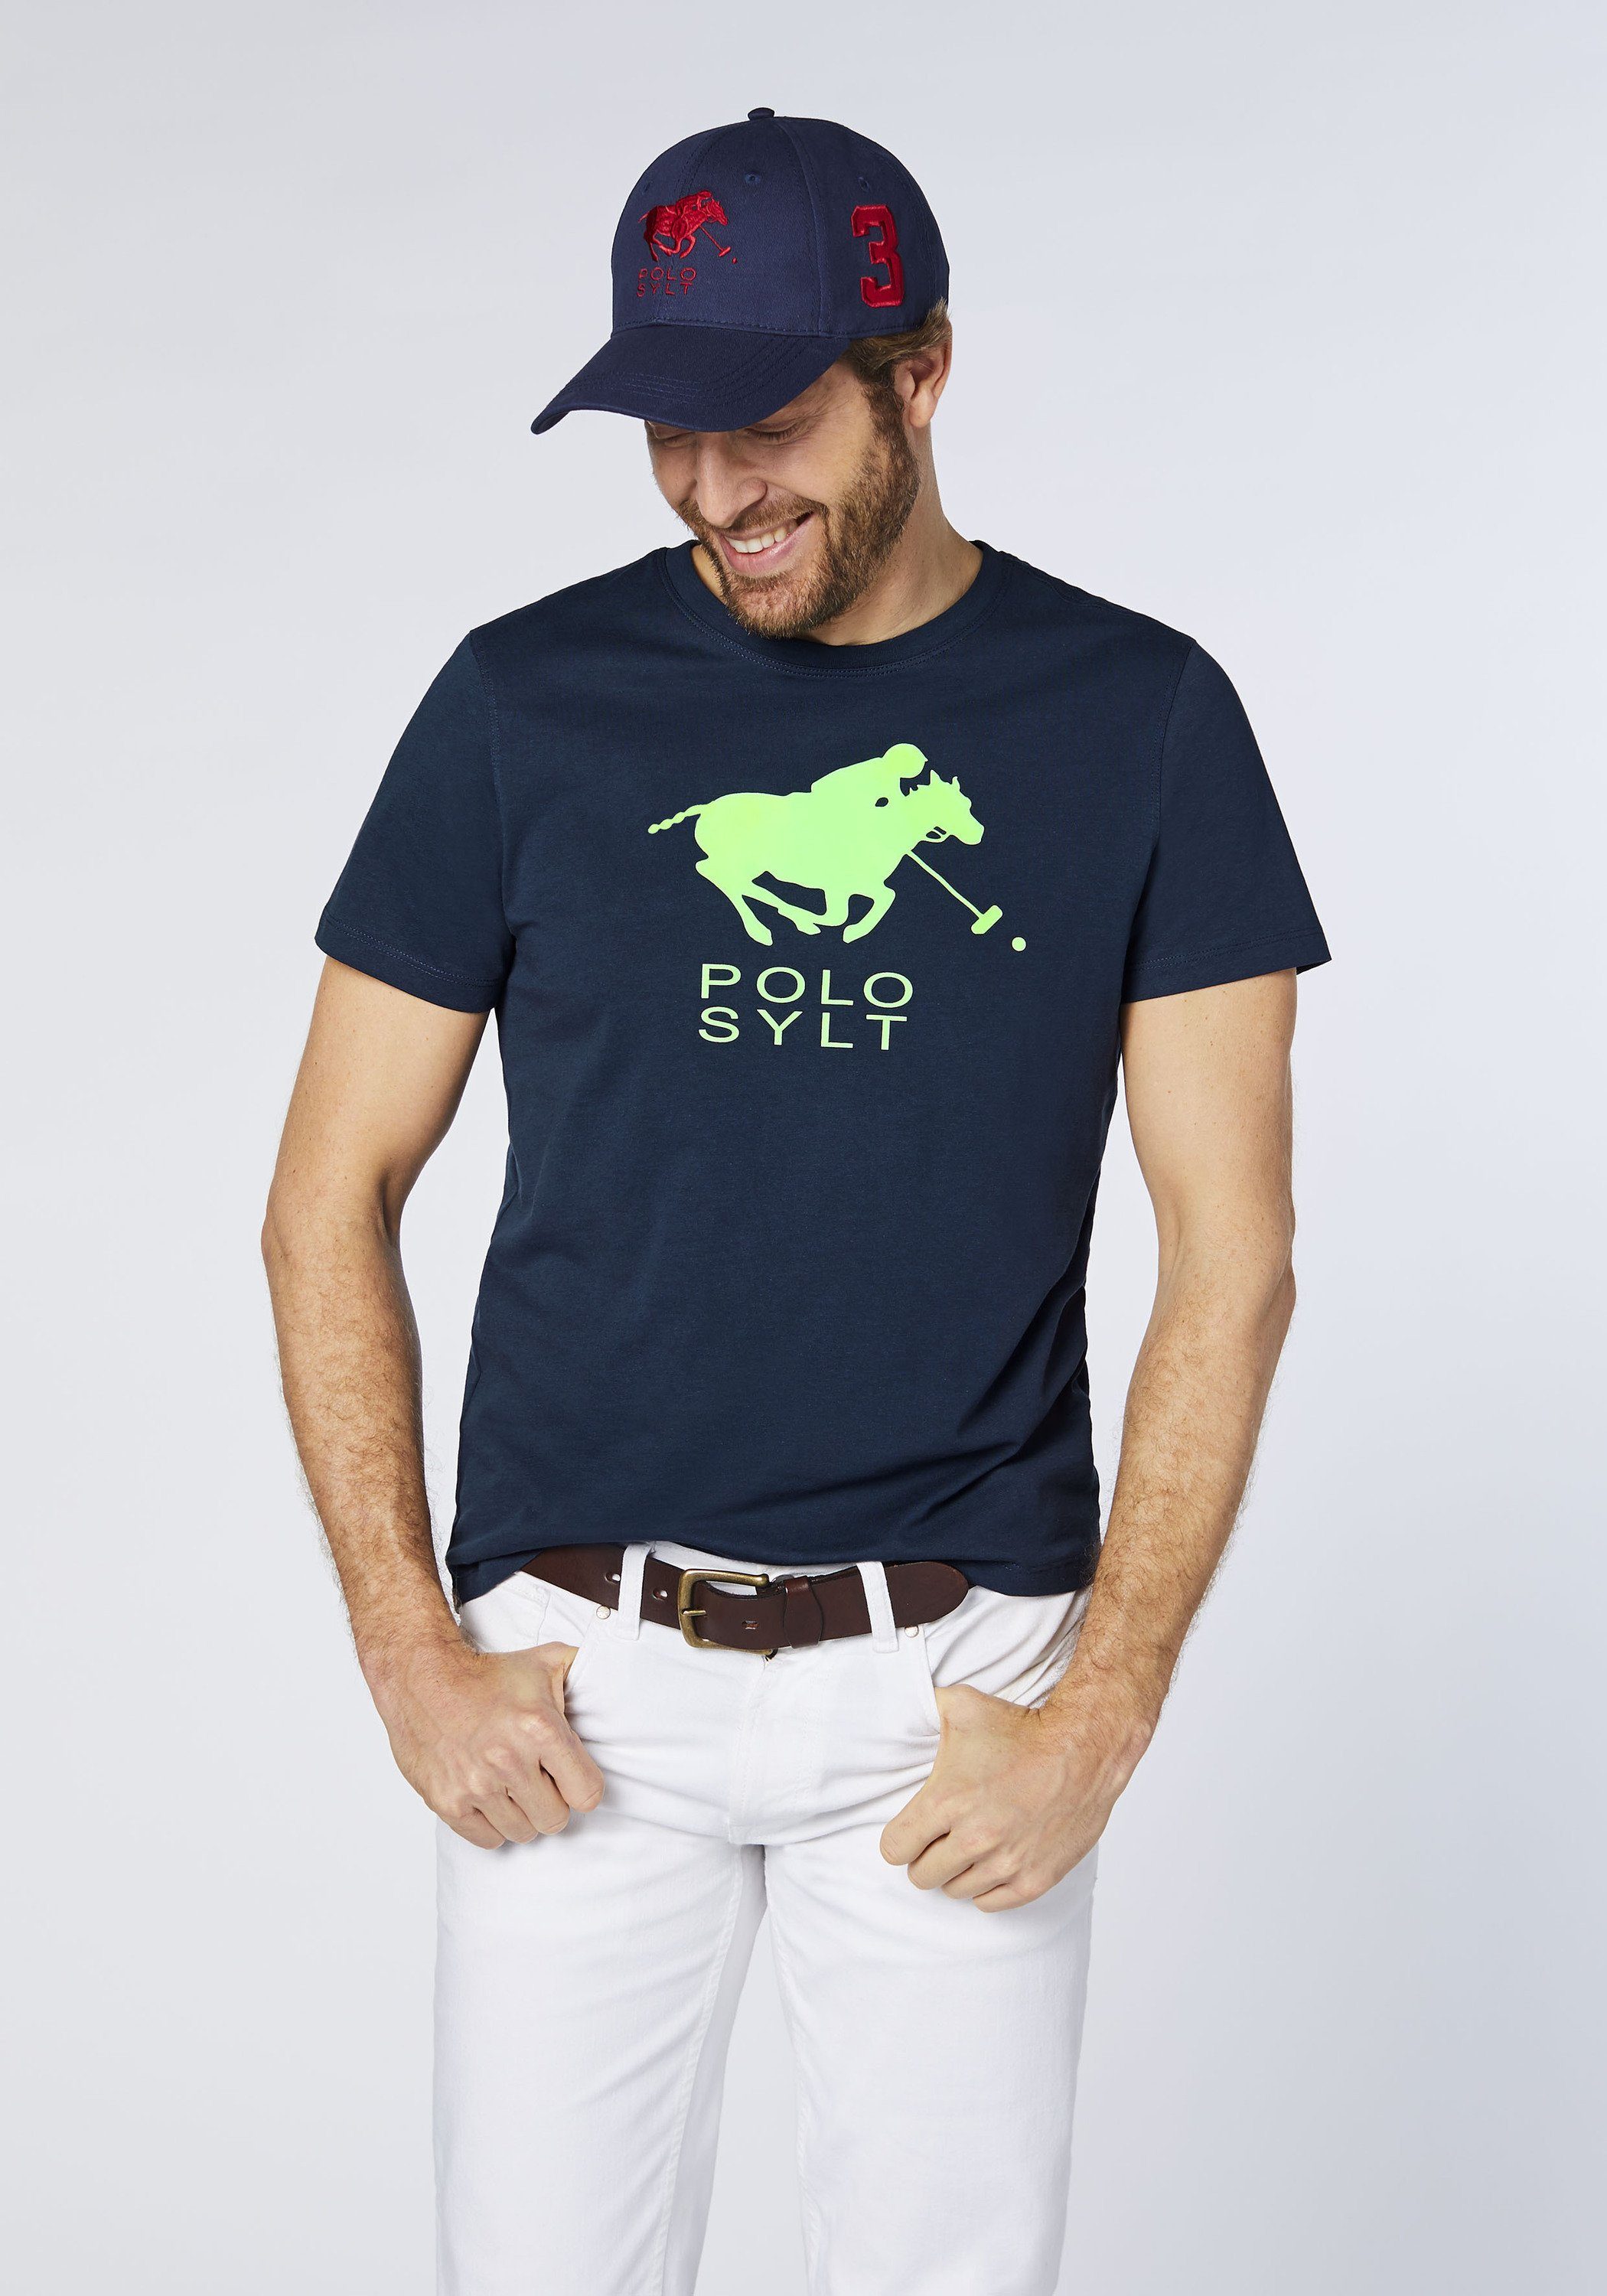 Polo Sylt Logo Print-Shirt Total Frontprint mit Neon Eclipse